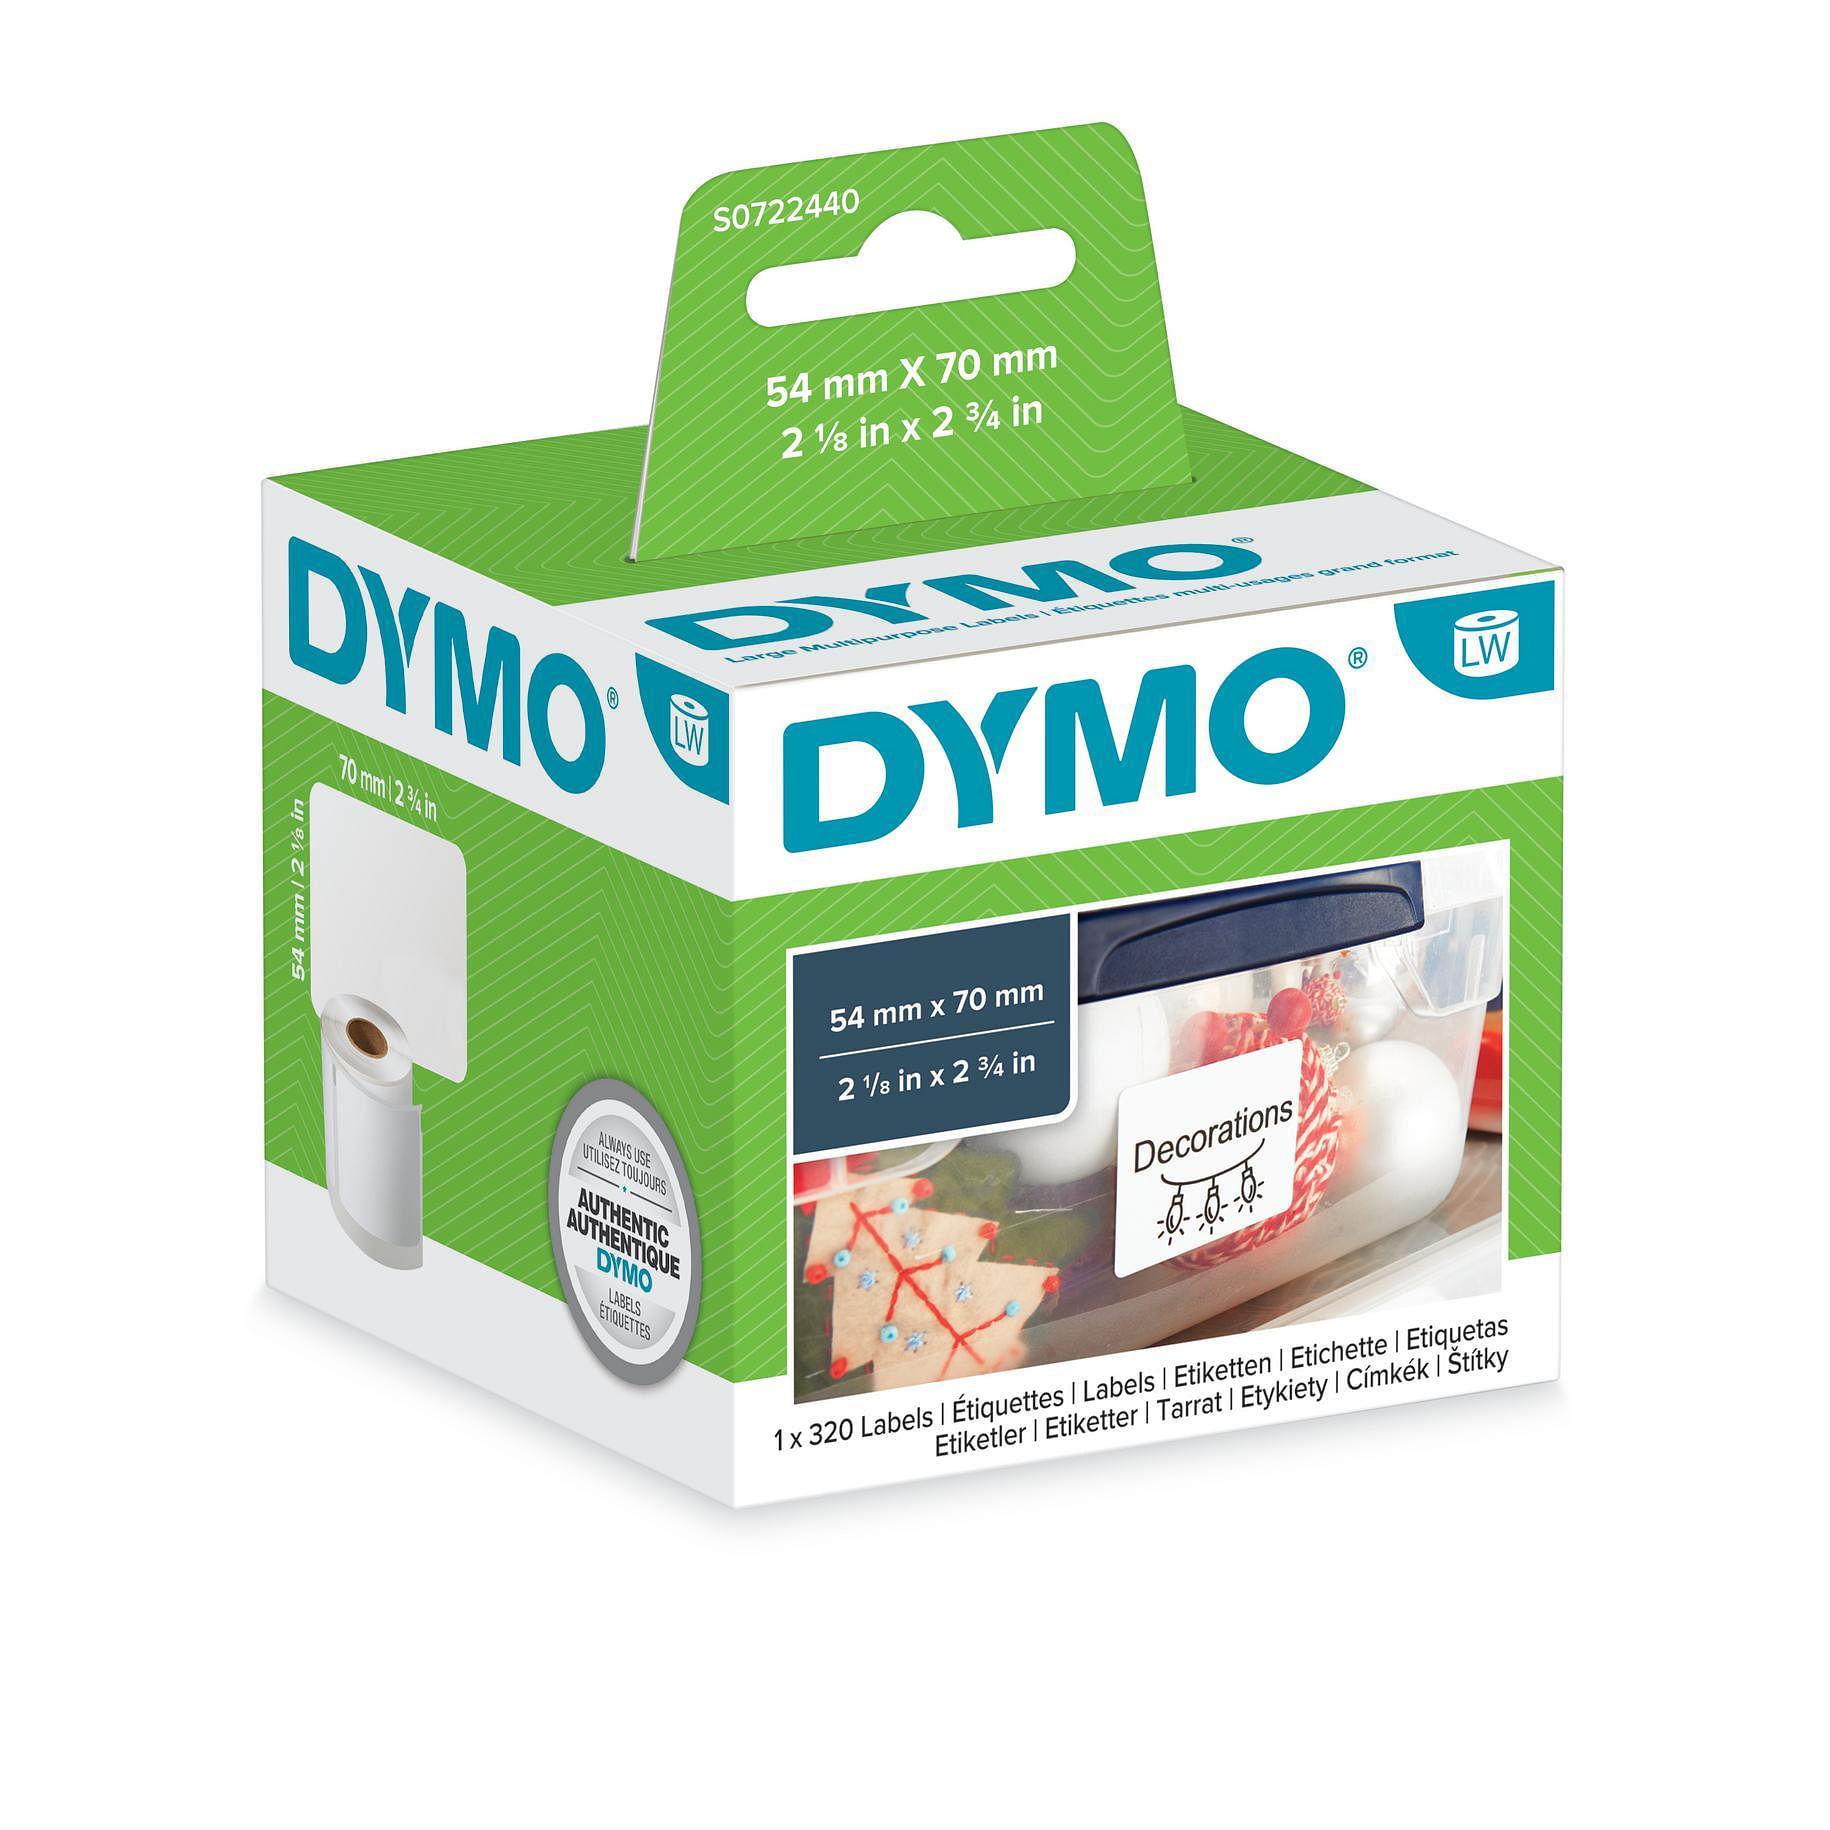 DYMO Multi-Purpose Labels - 54x70mm [S0722440]